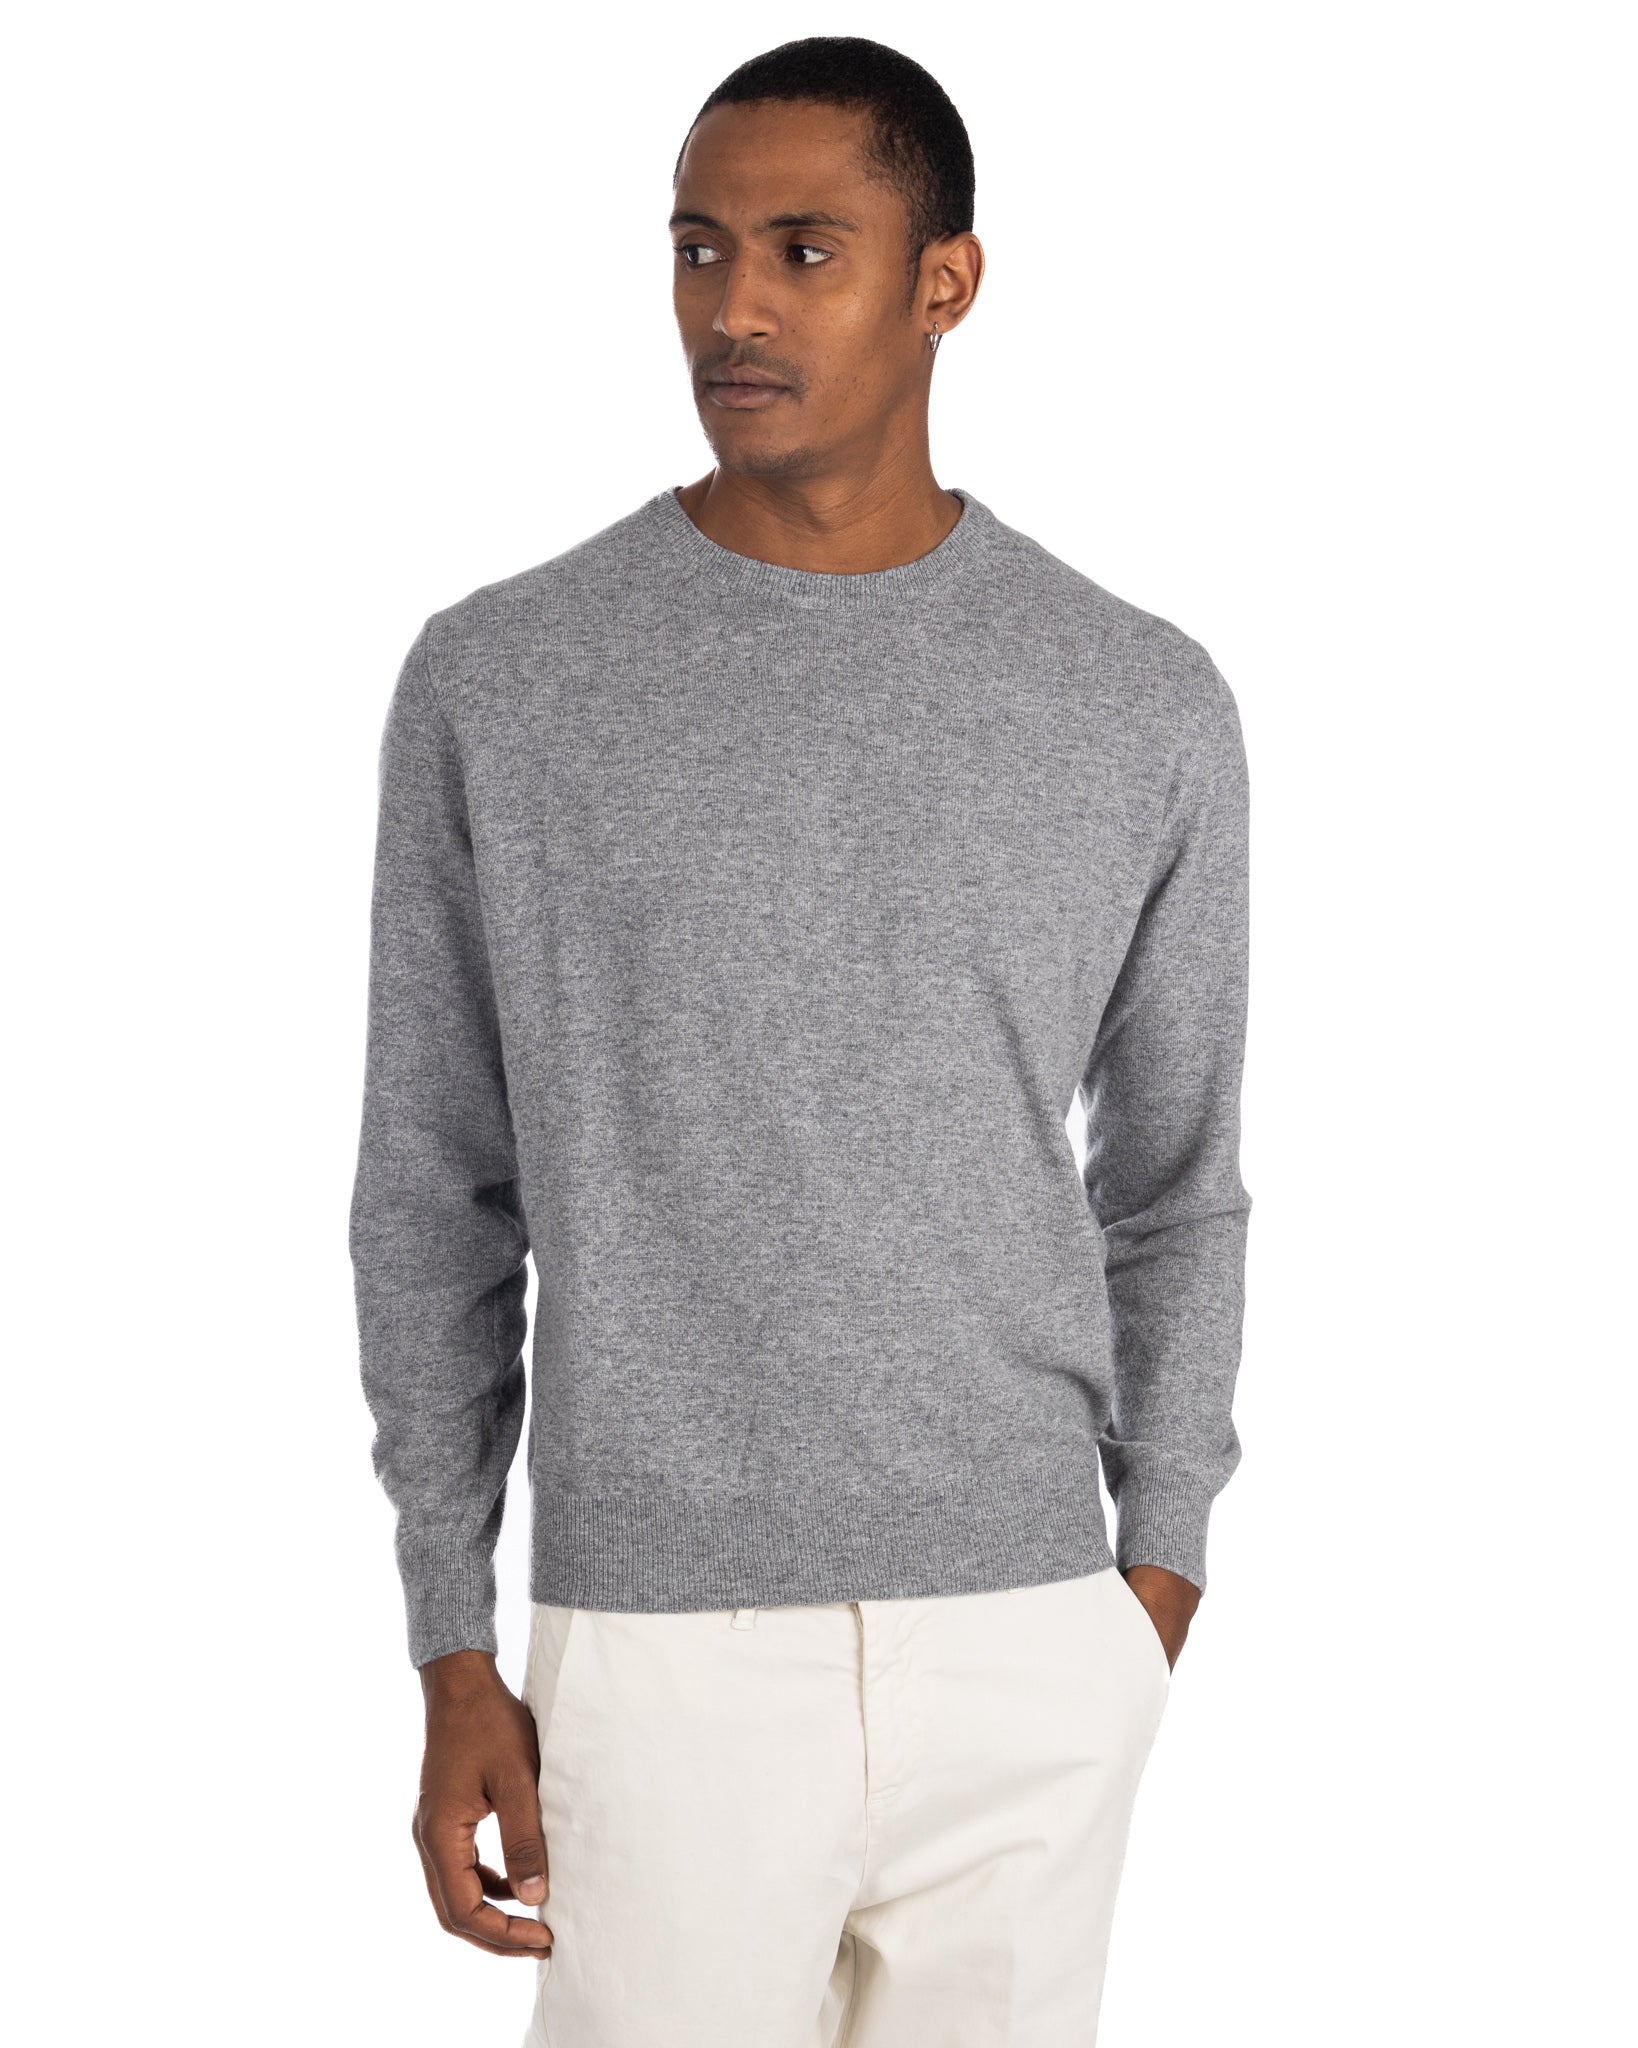 Dustin - gray cashmere blend crew neck sweater